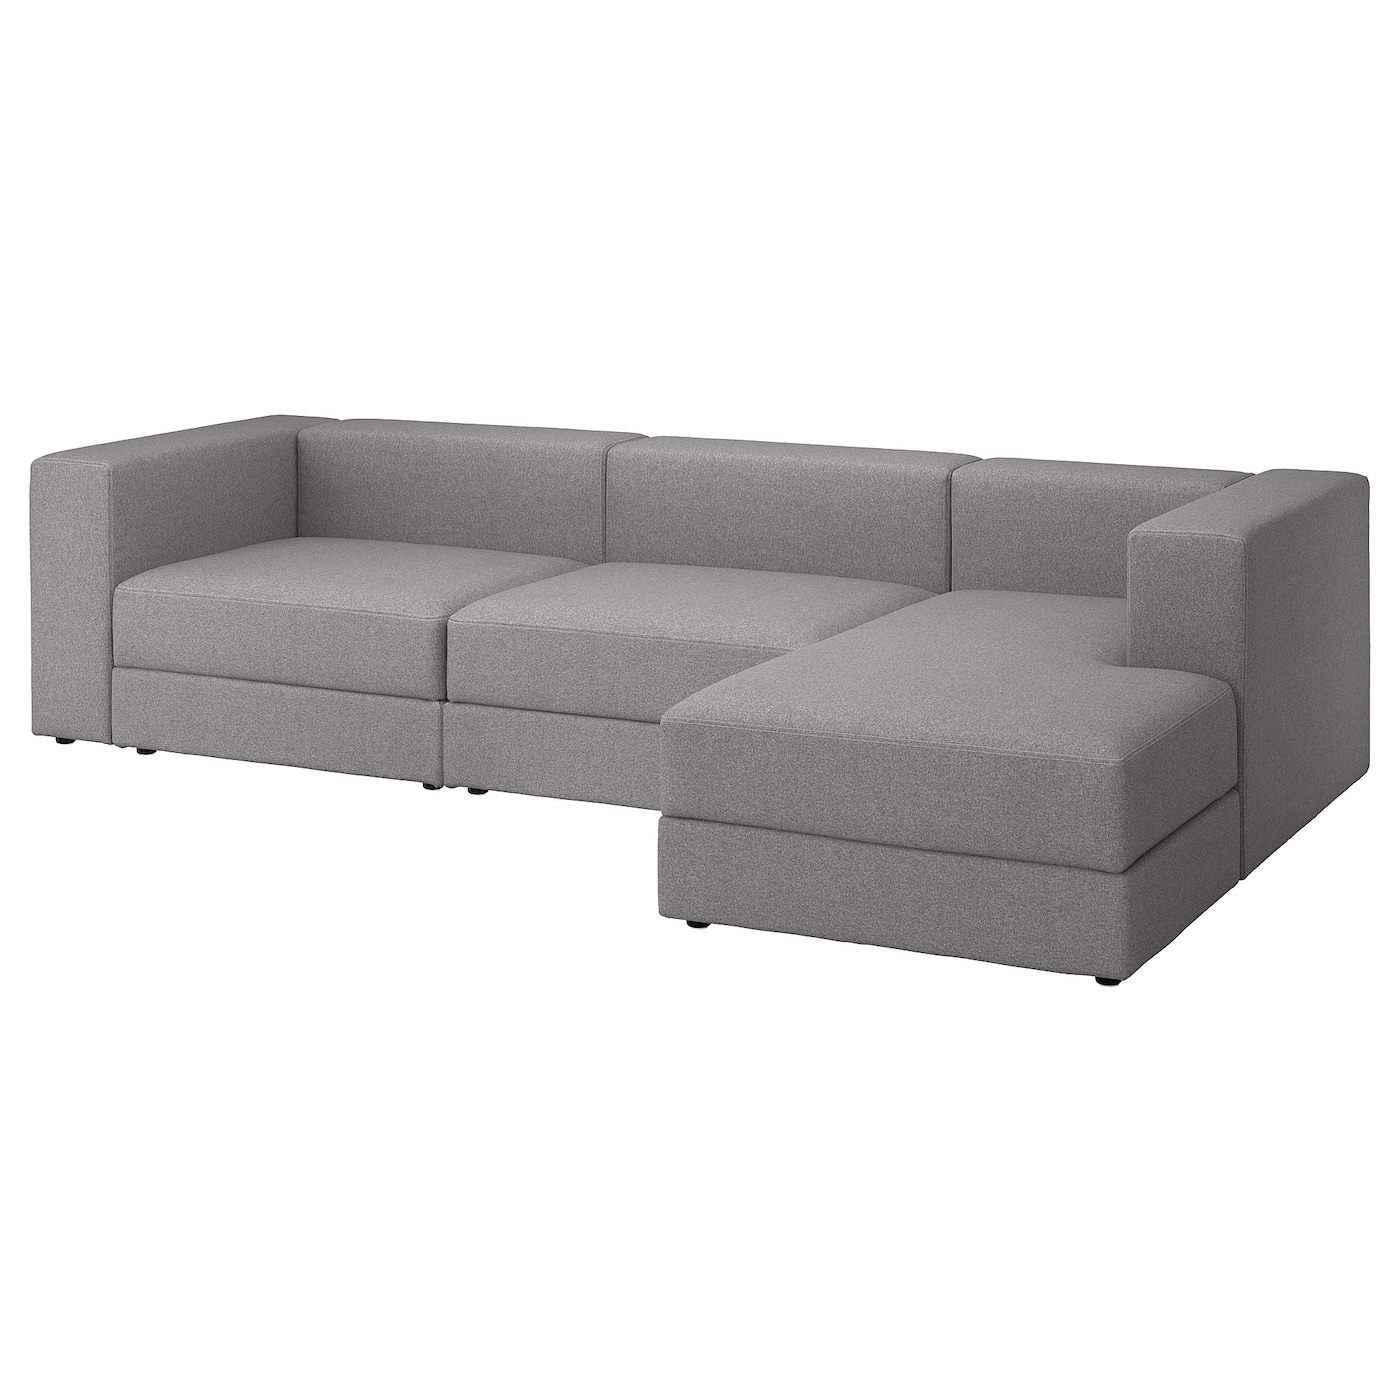 ДЖЭТТЕБО 4-местный диван + диван, правый/Тонеруд серый JÄTTEBO IKEA